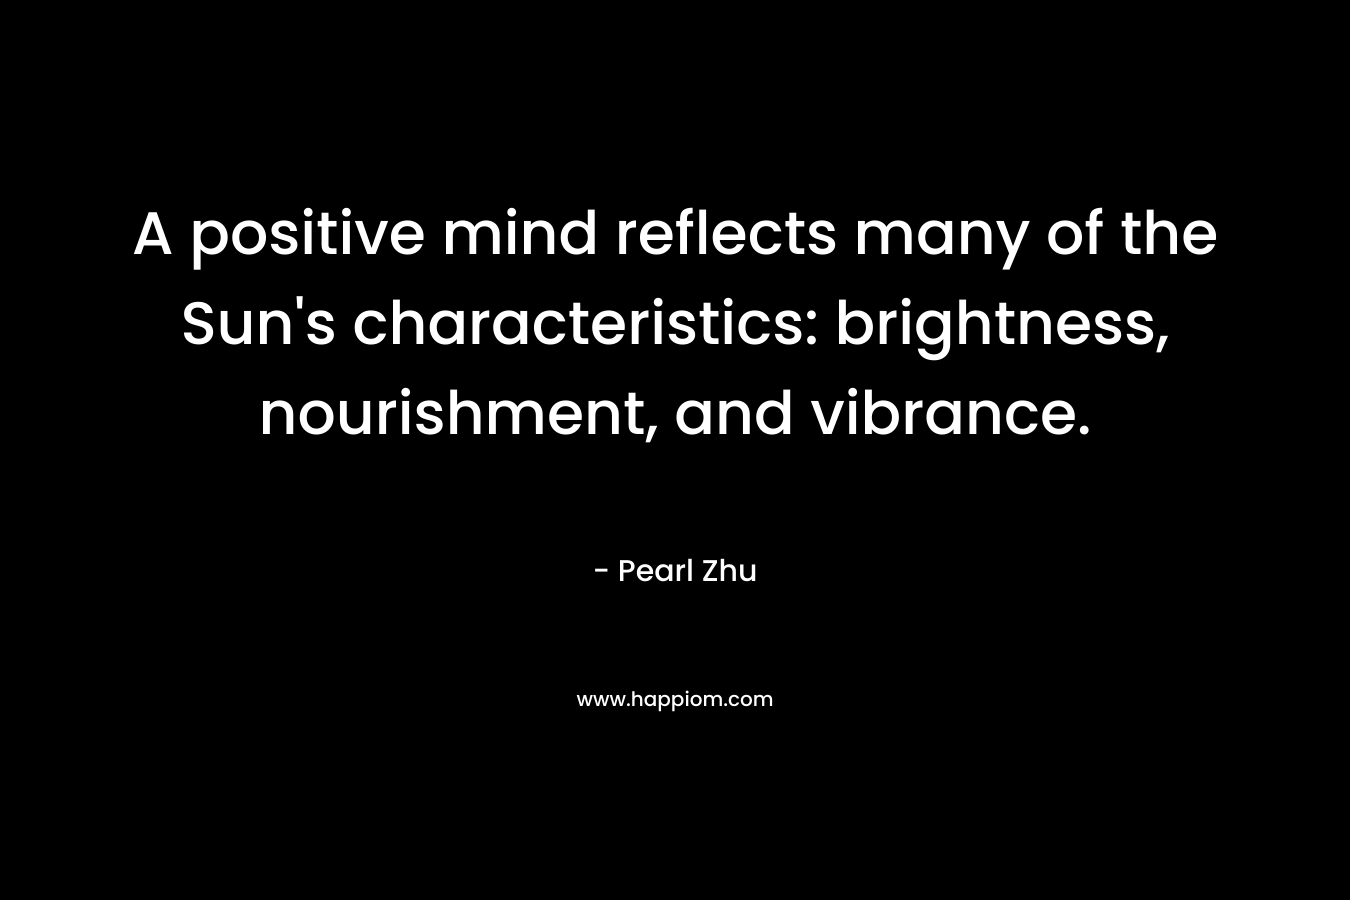 A positive mind reflects many of the Sun's characteristics: brightness, nourishment, and vibrance.